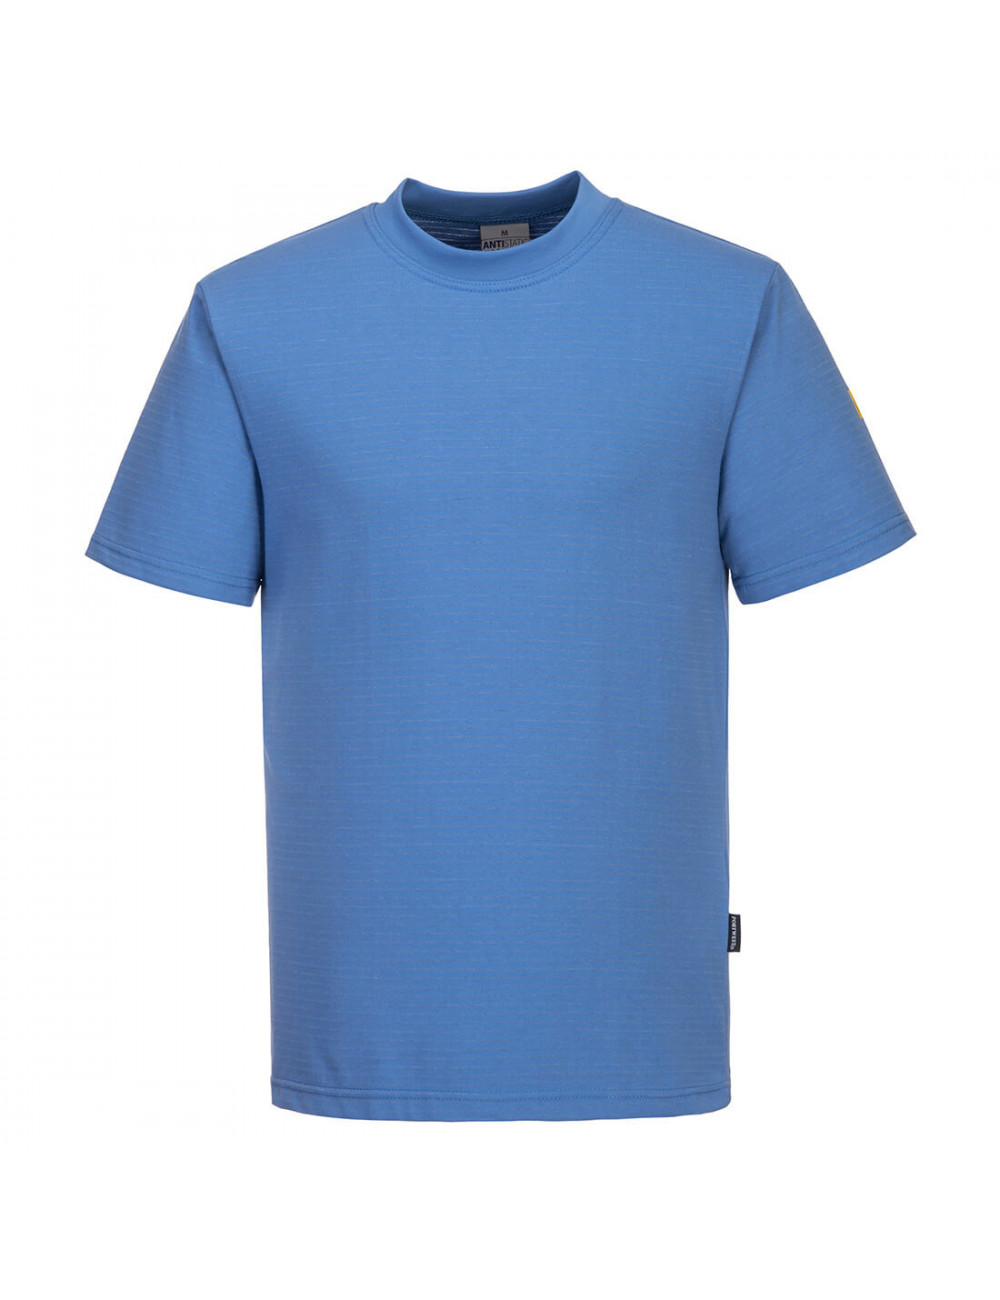 ESD antistatisches T-Shirt blau Hamilton Portwest